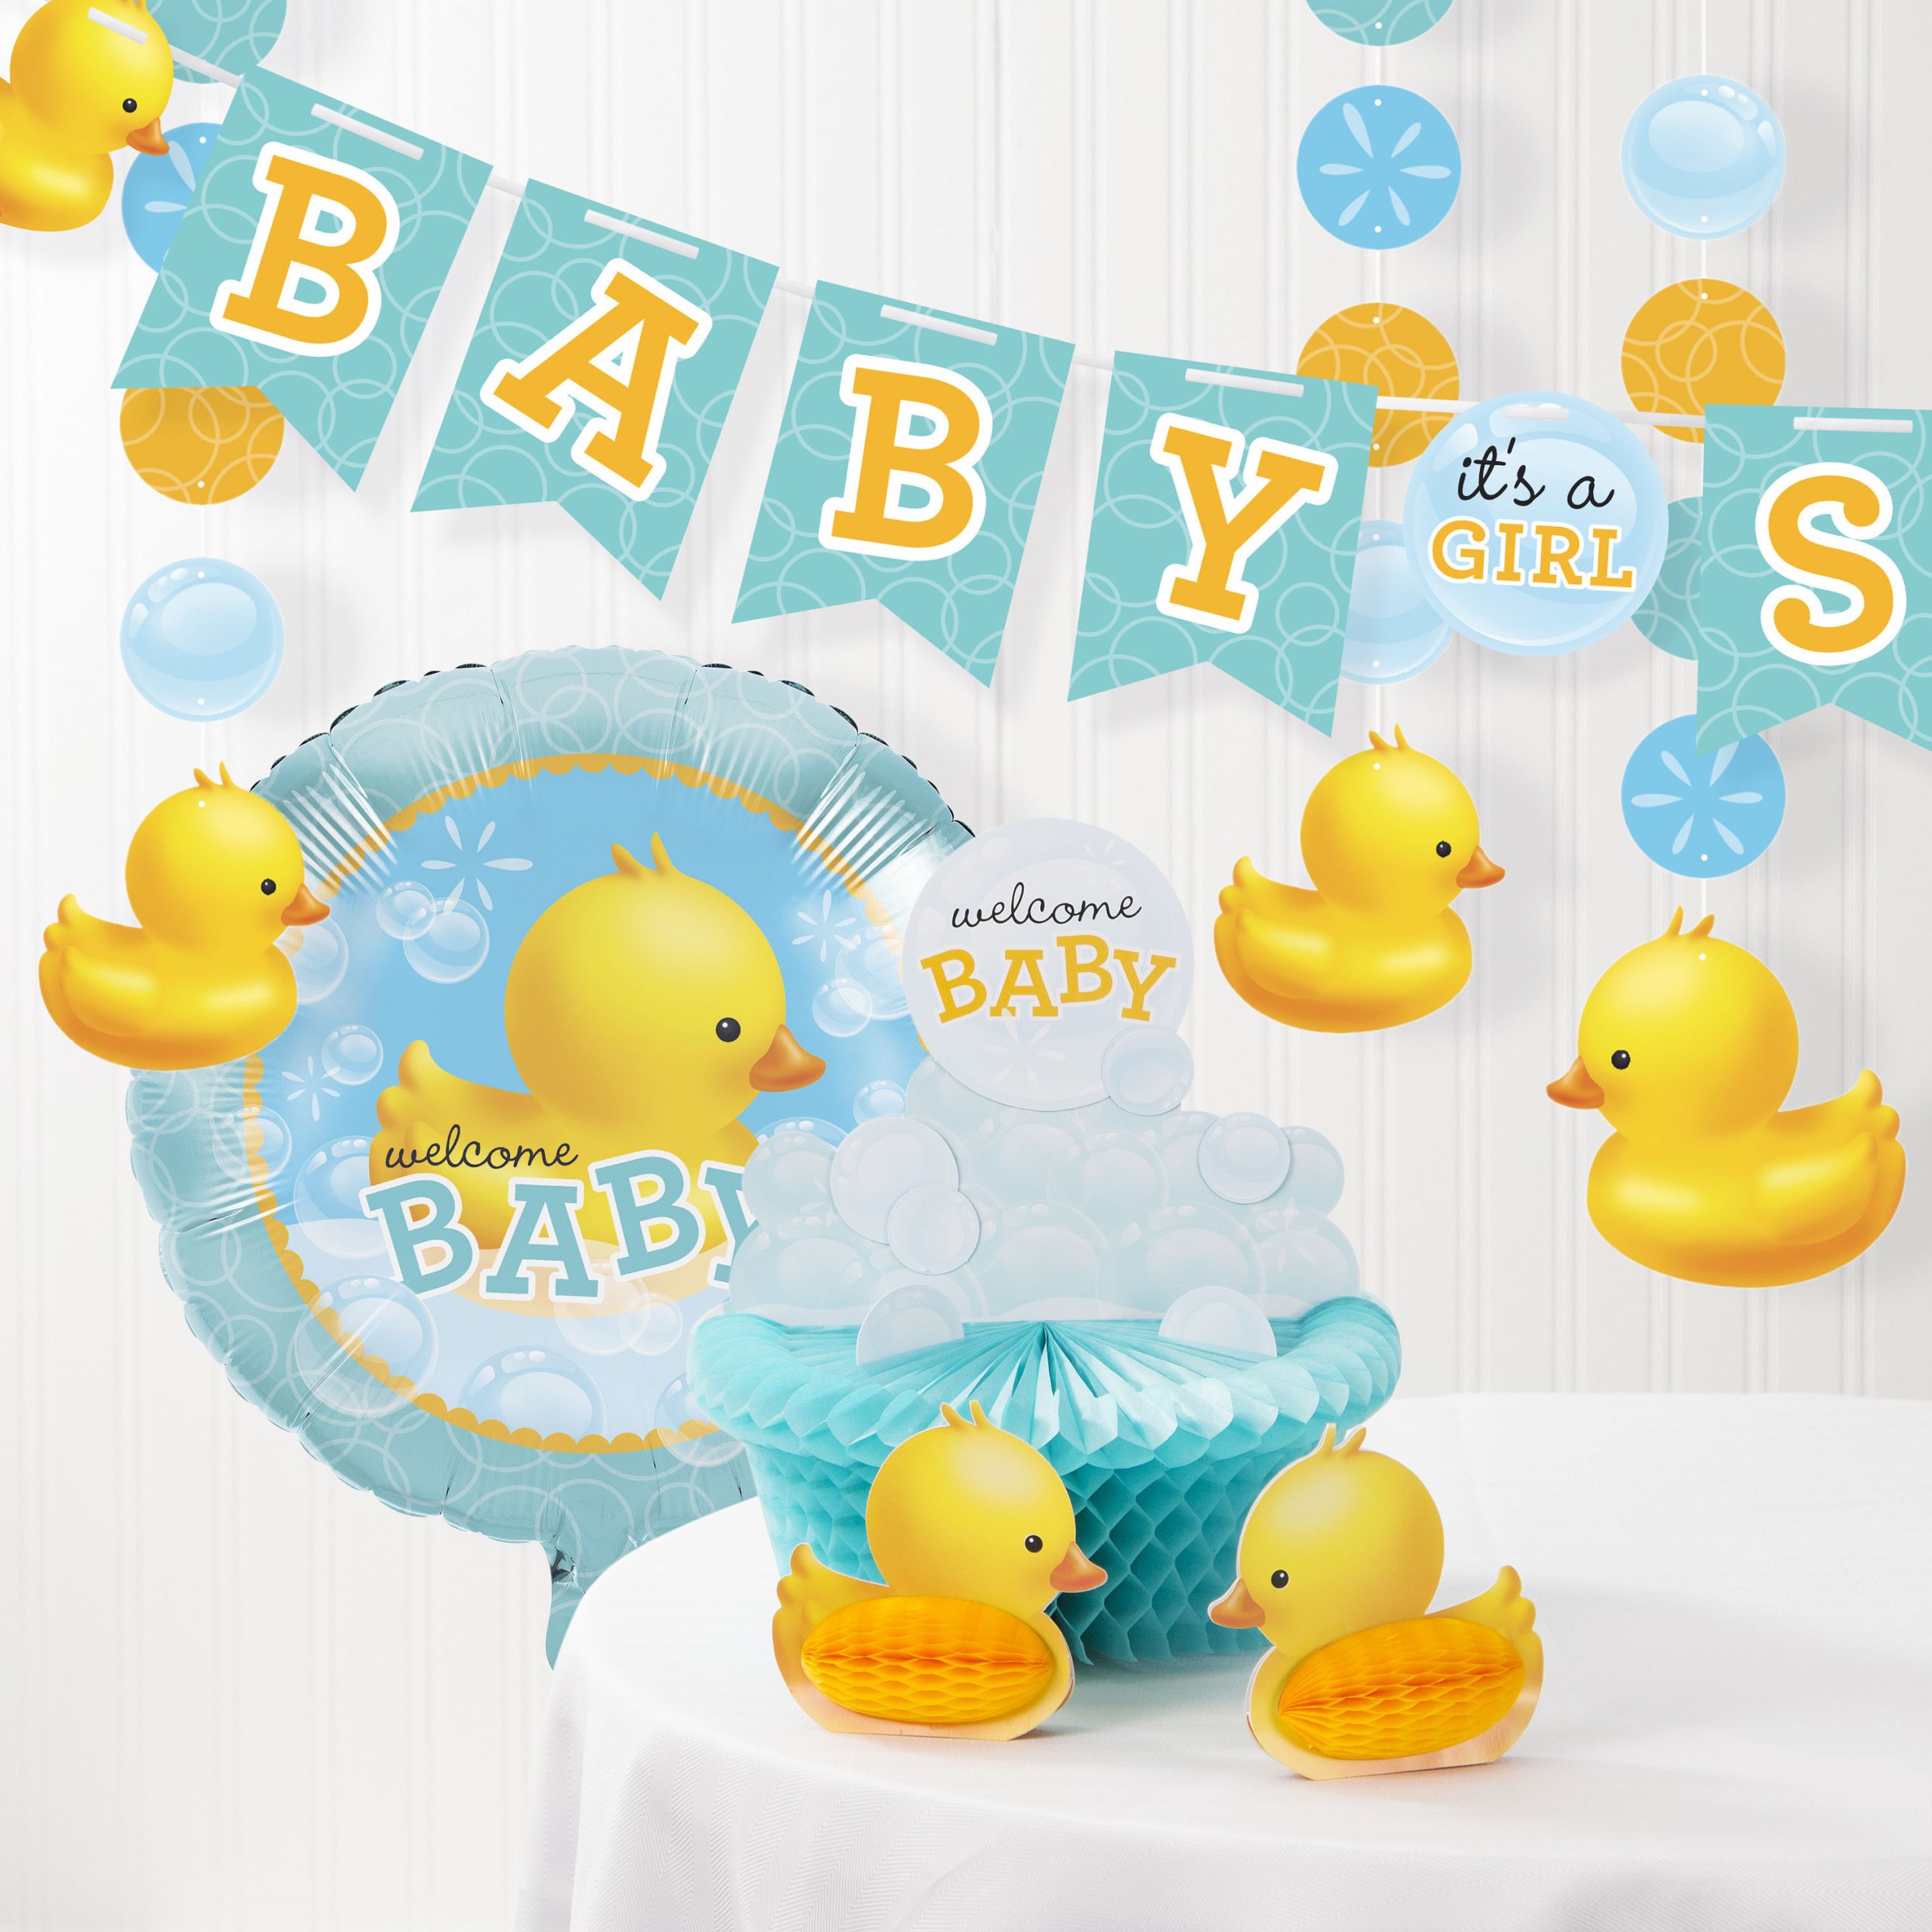 Party City Rubber Duck Baby Shower
 Bubble Bath Rubber Duck Baby Shower Decorations Kit